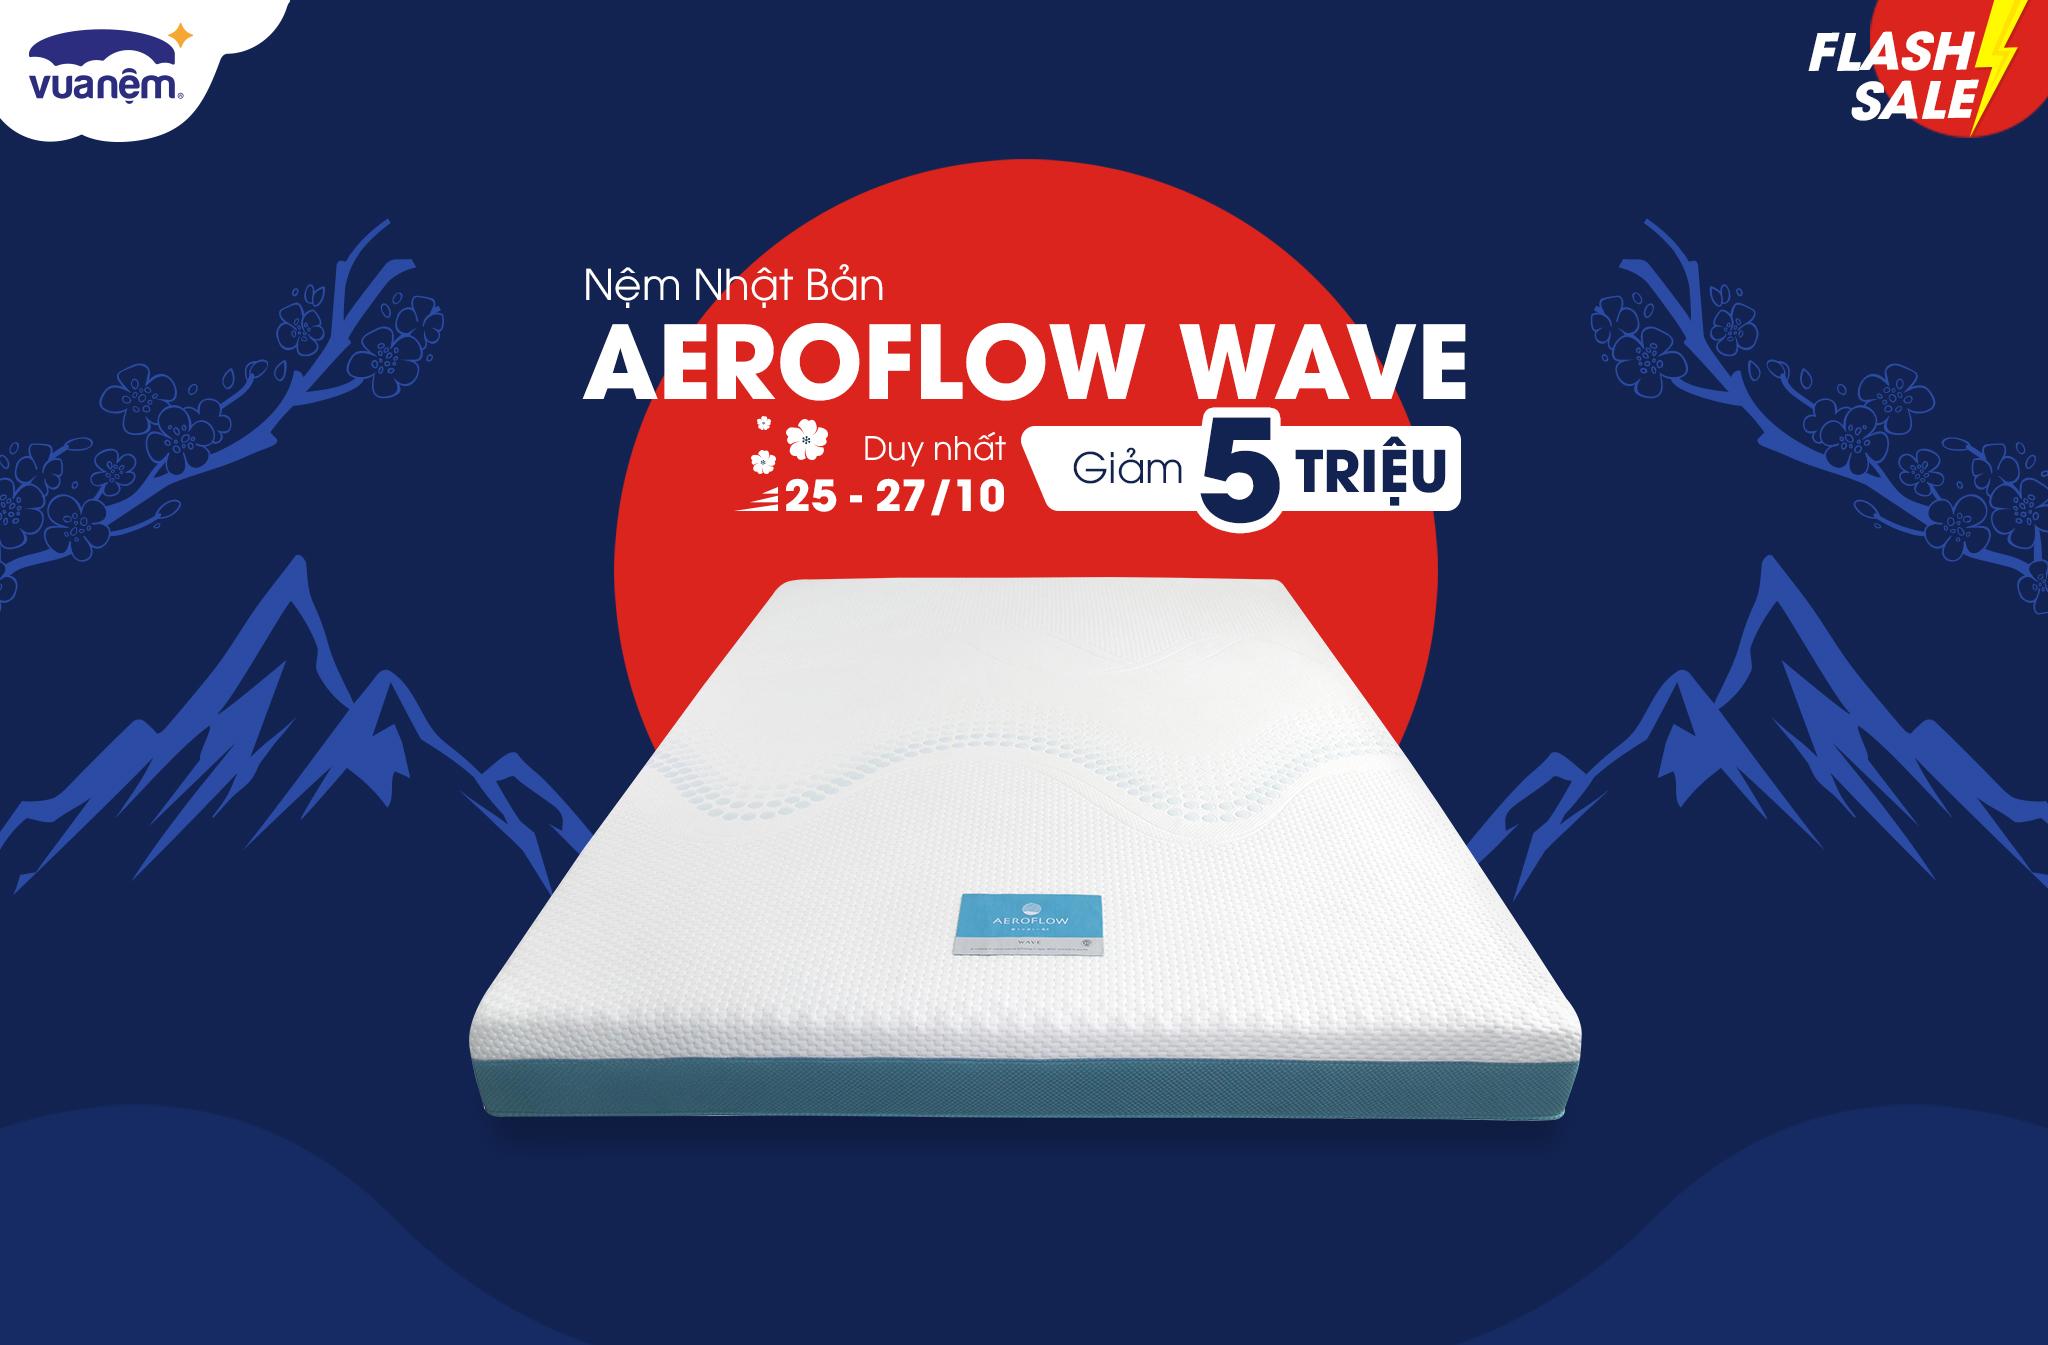 Vua nệm - Aeroflow Wave 25-27.10.jpg